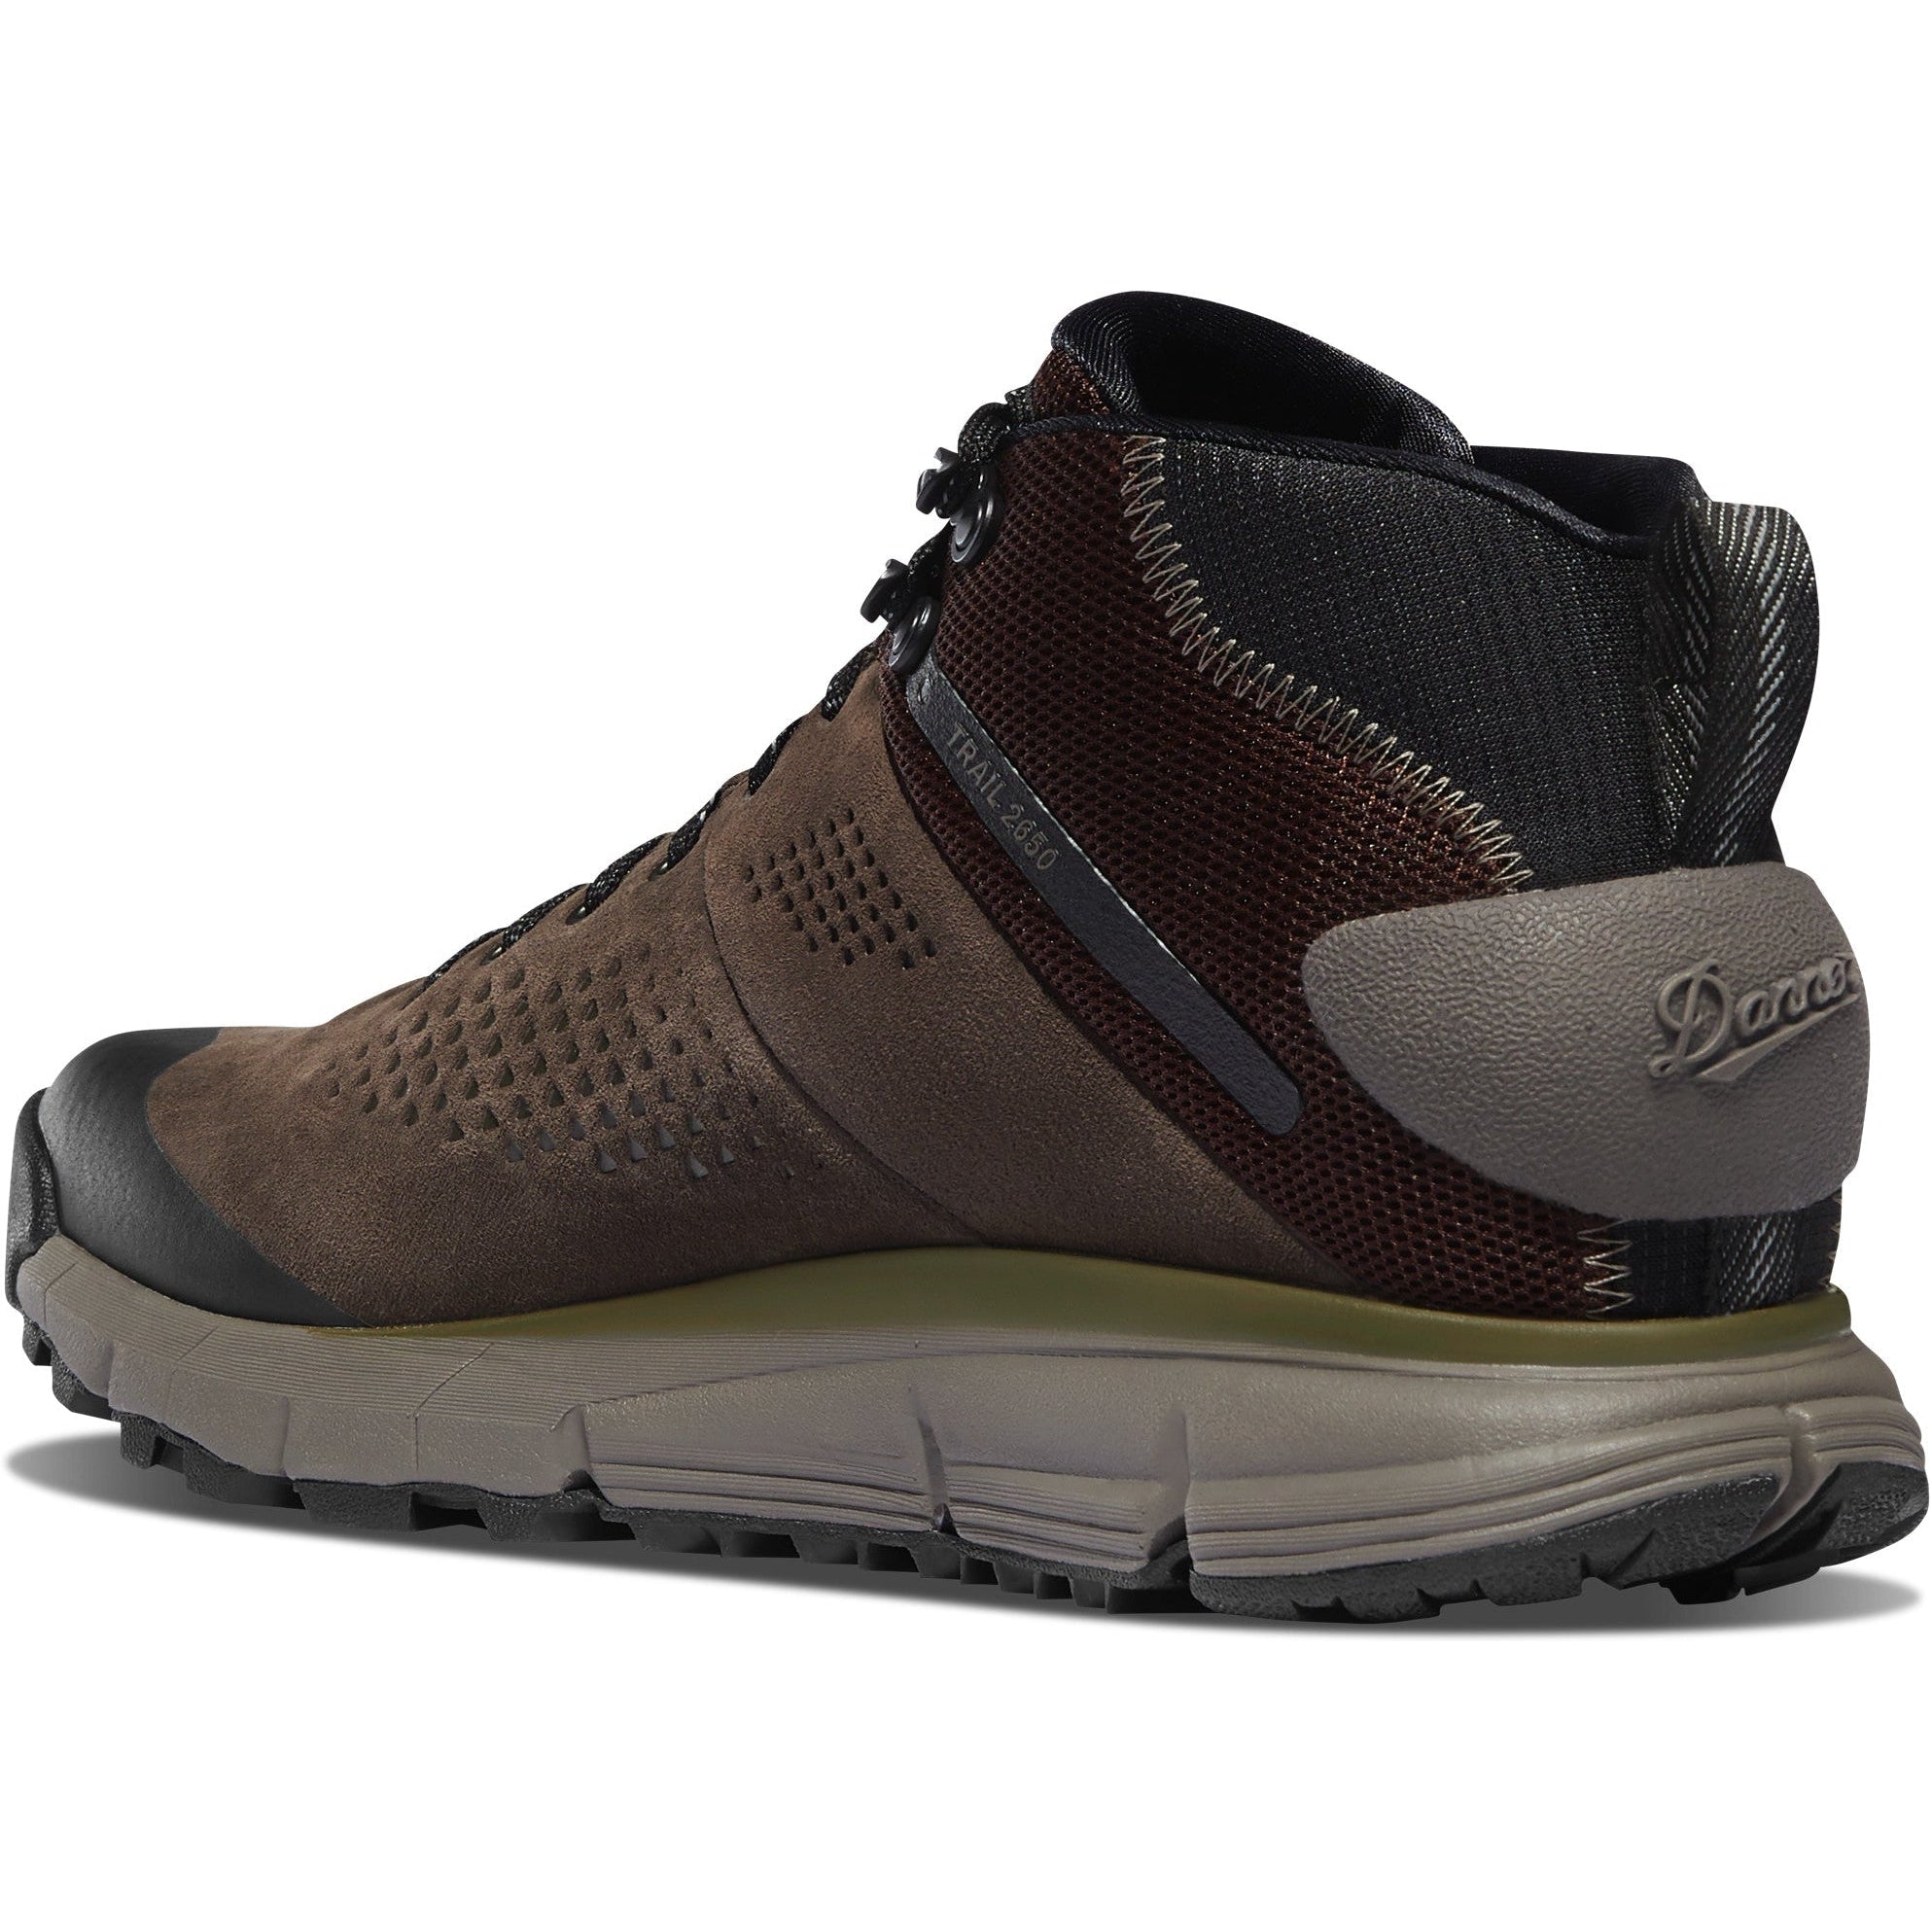 Danner Men's Trail 2650 GTX Mid 4" WP Hiking Shoe - Brown - 61243  - Overlook Boots